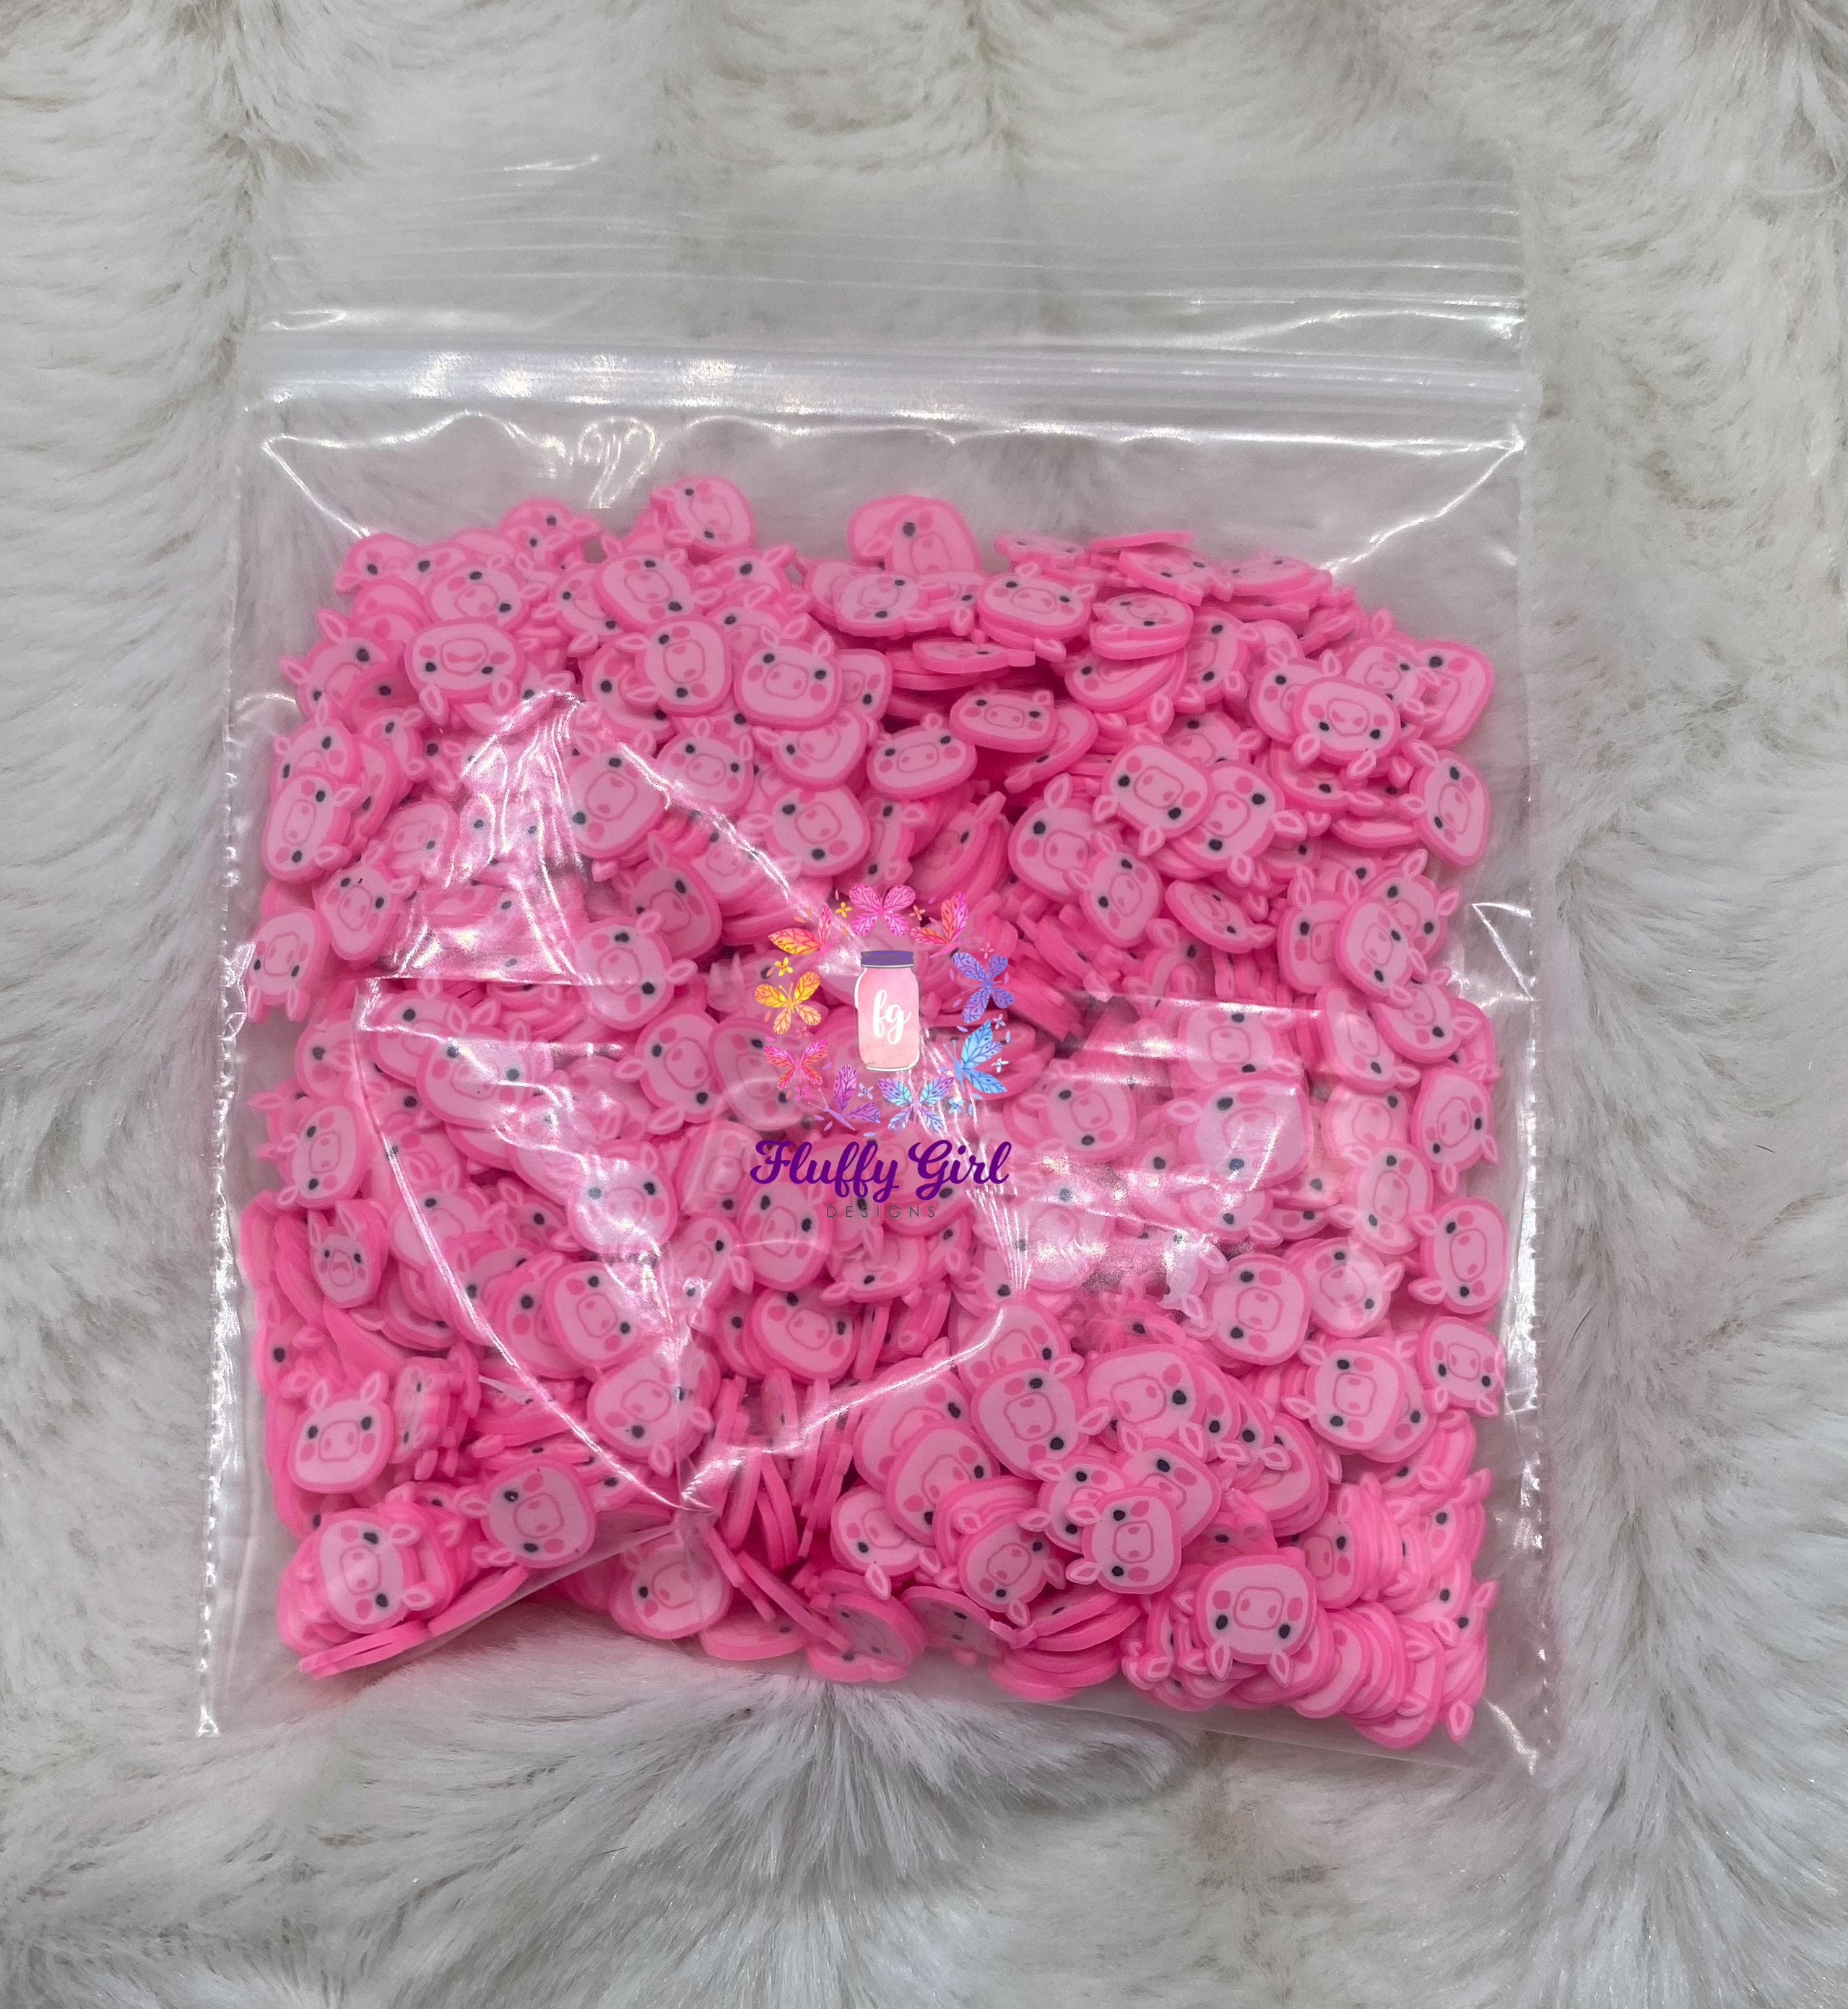 Pig Snort Fake Sprinkles – Glitter Lambs